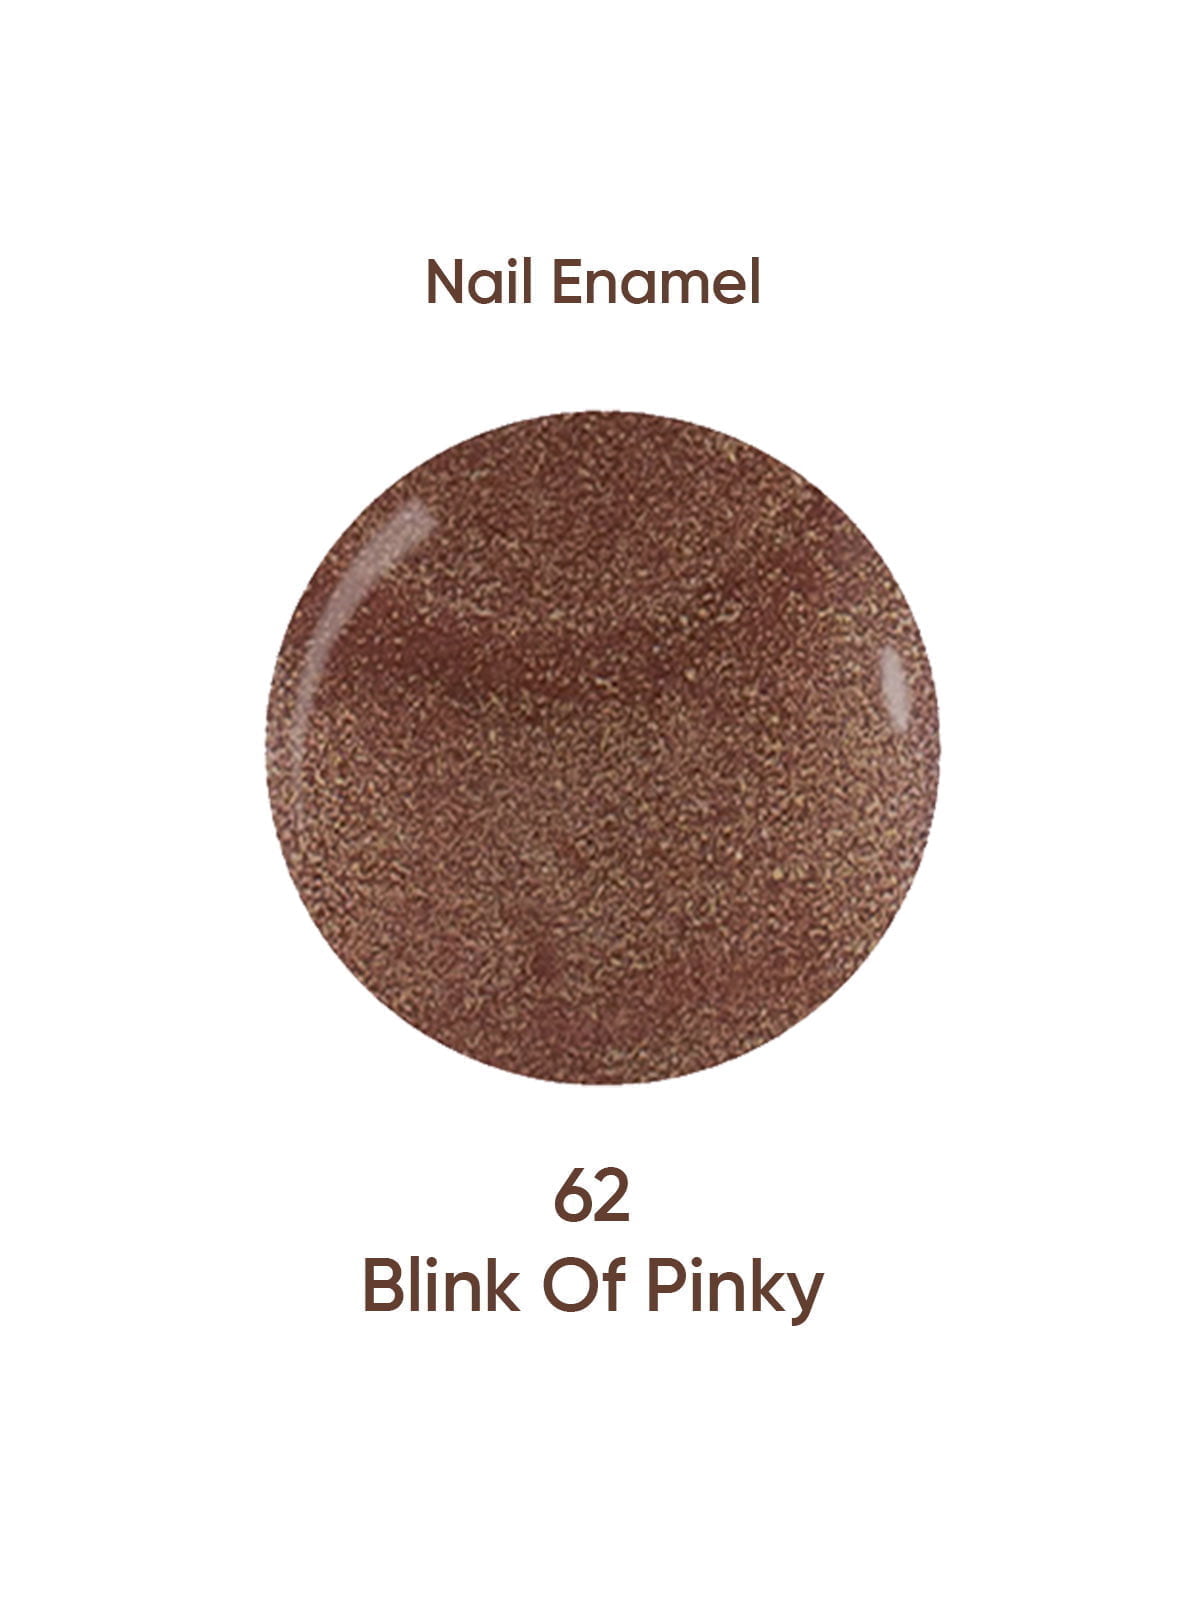 Nail Enamel Blink of Pinky- 62